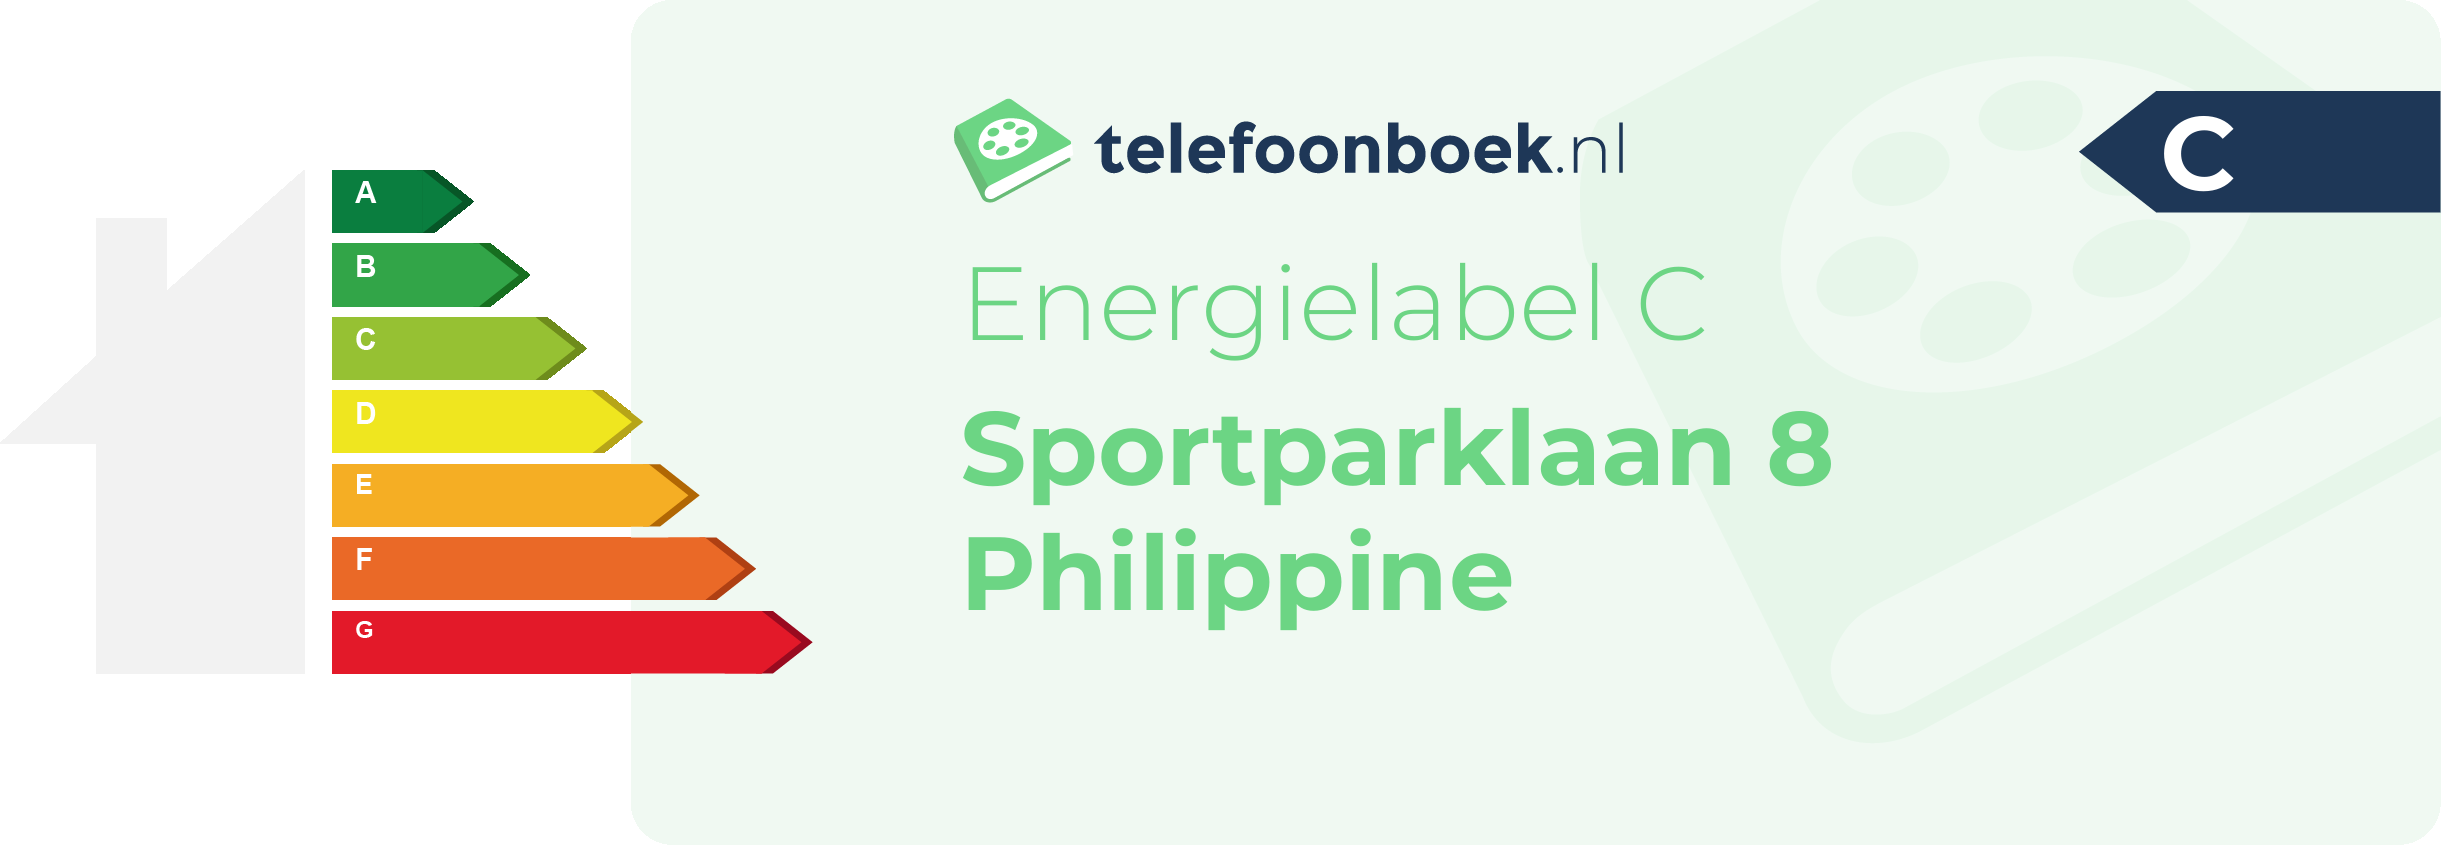 Energielabel Sportparklaan 8 Philippine